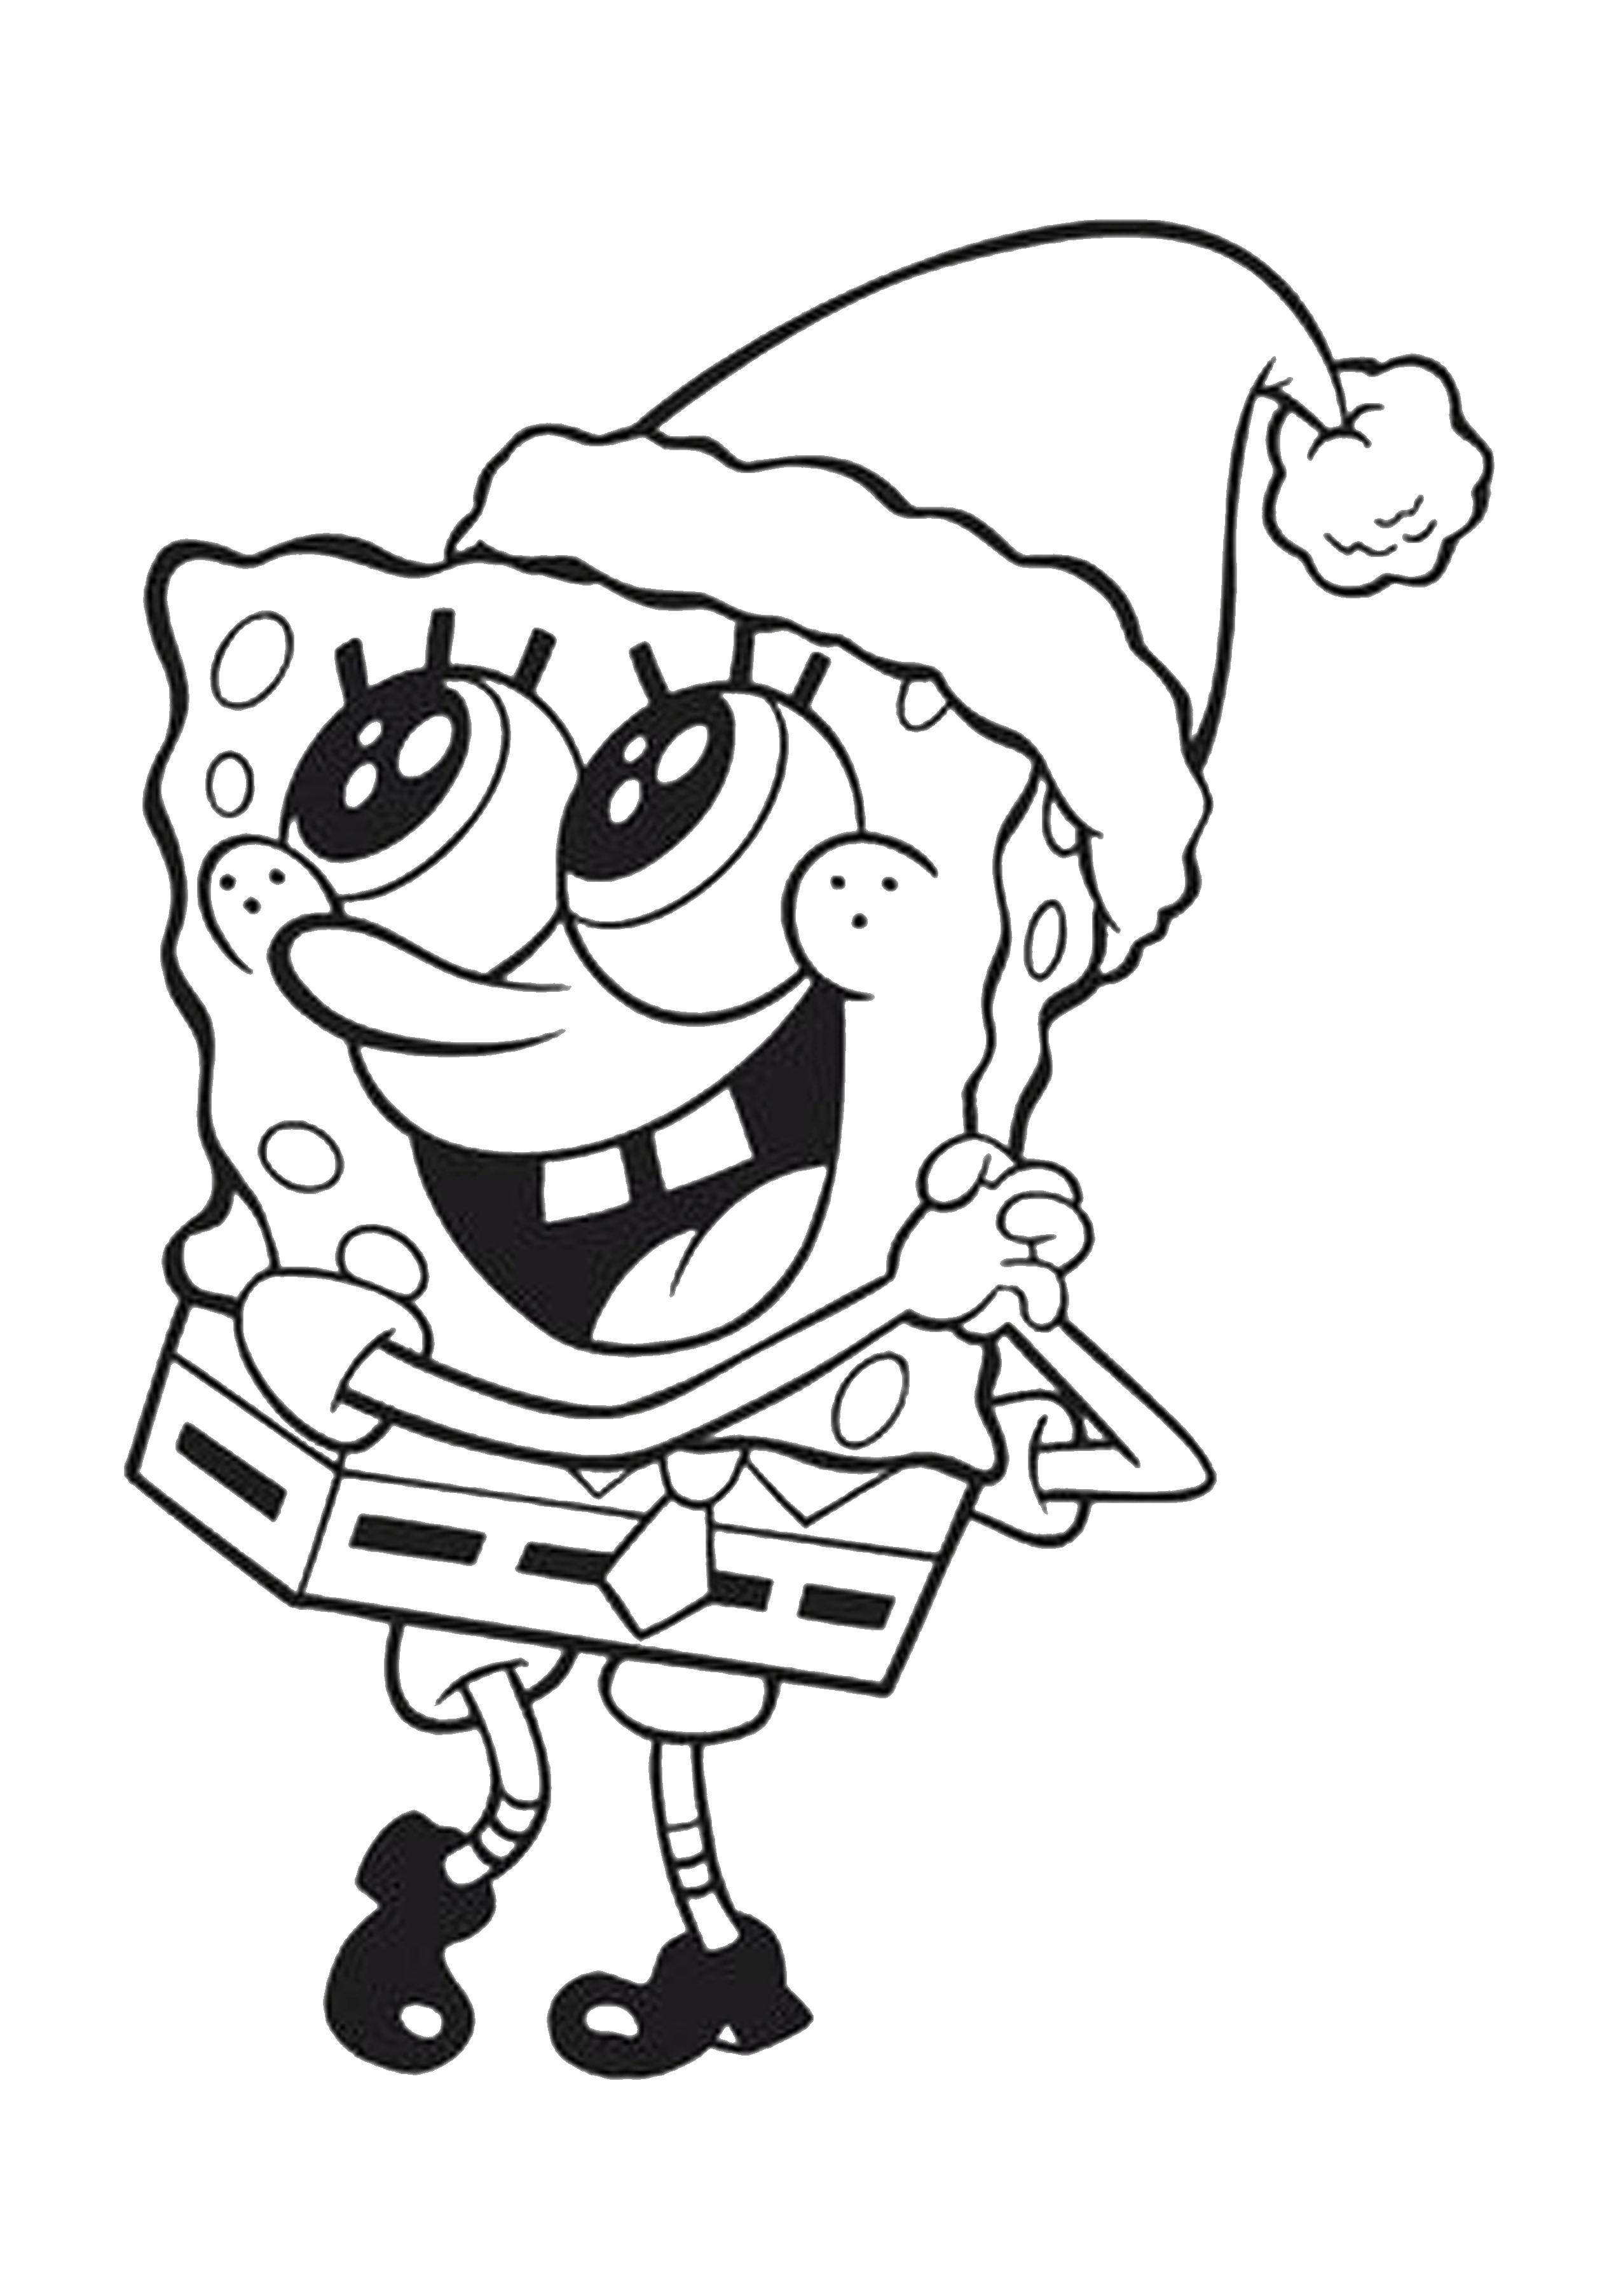 Coloring Christmas spongebob. Category Spongebob. Tags:  Cartoon character, spongebob, spongebob.